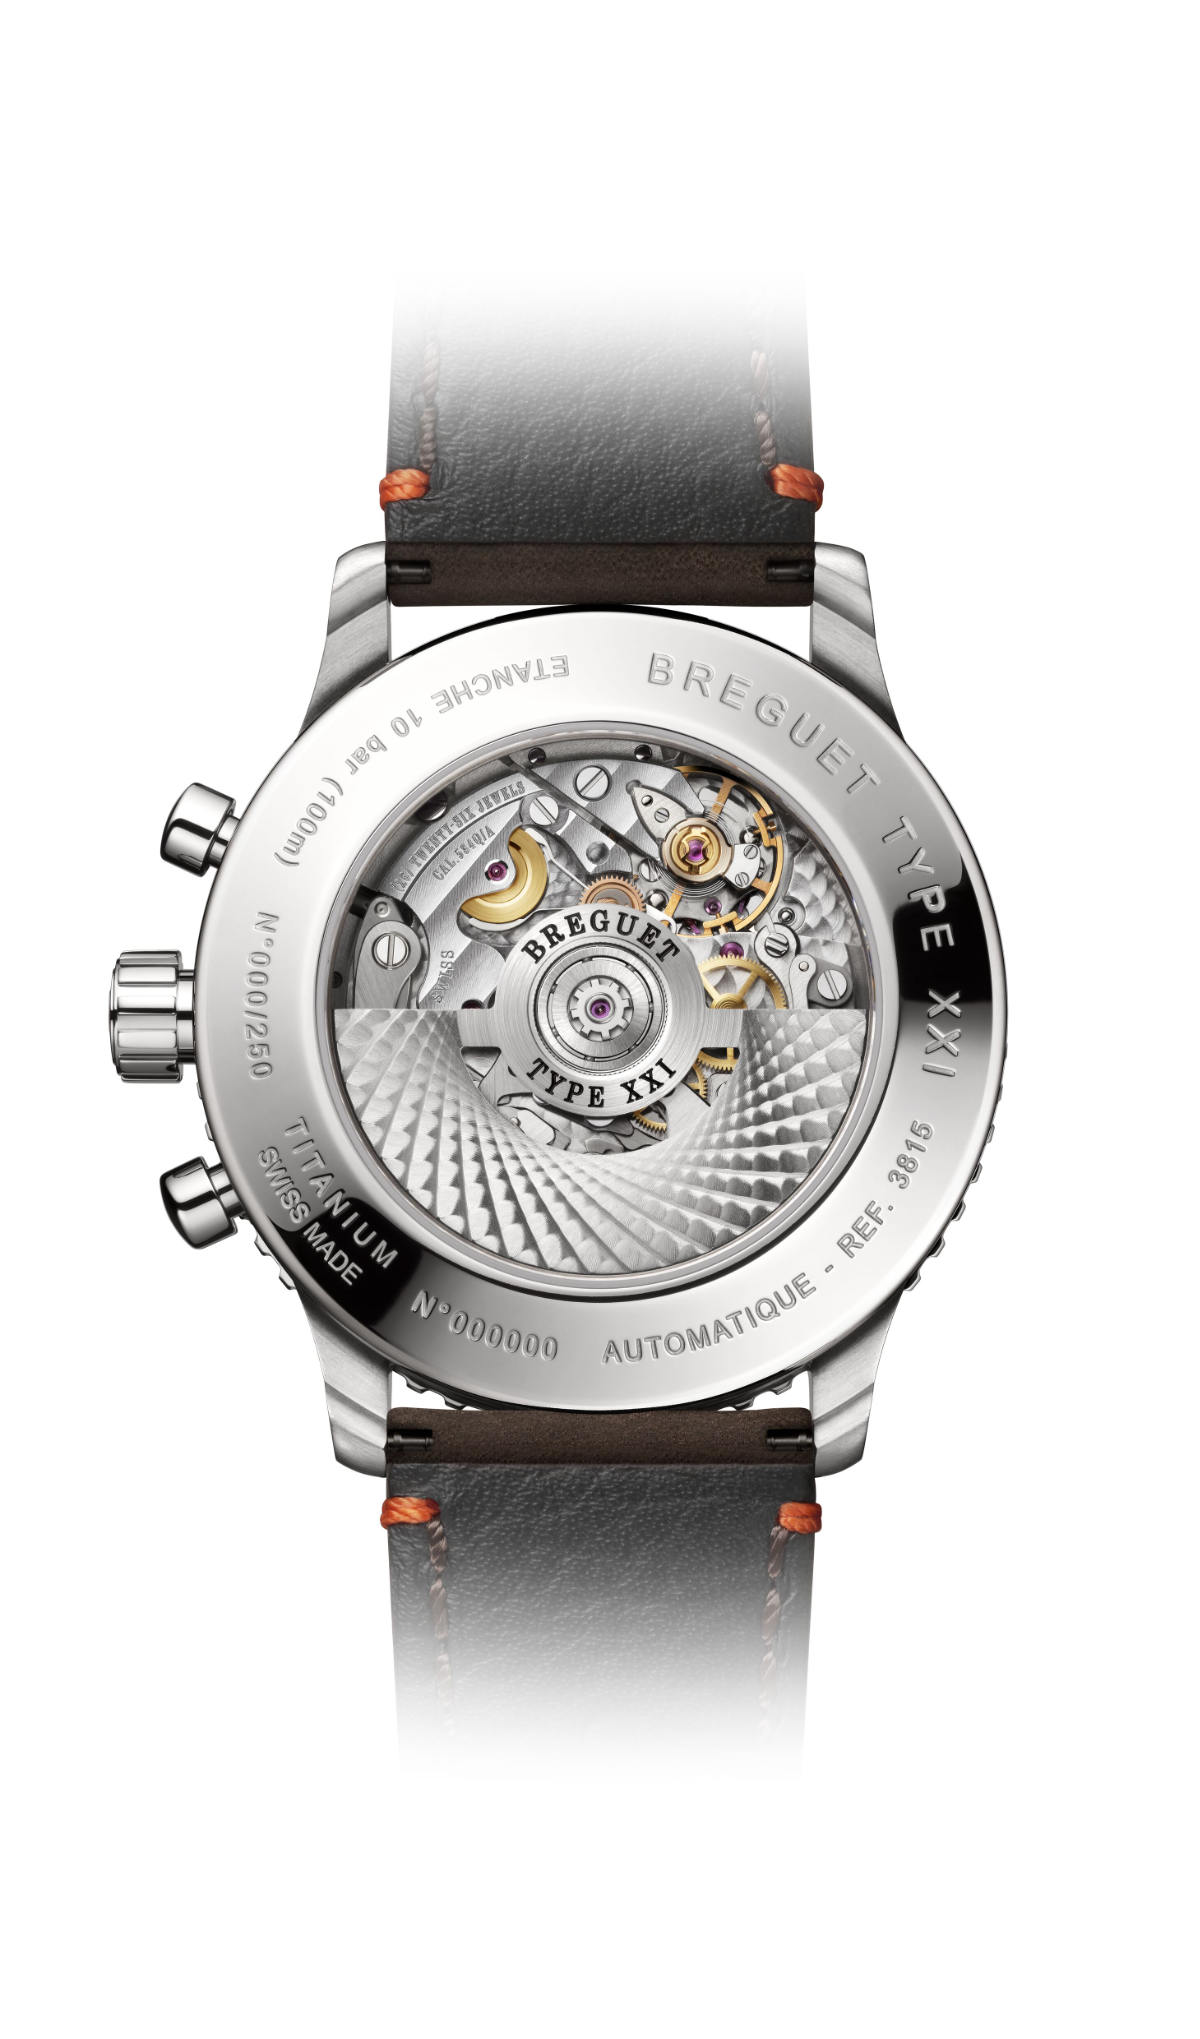 New Watch From BREGUET: Type XXI 3815 In Titanium